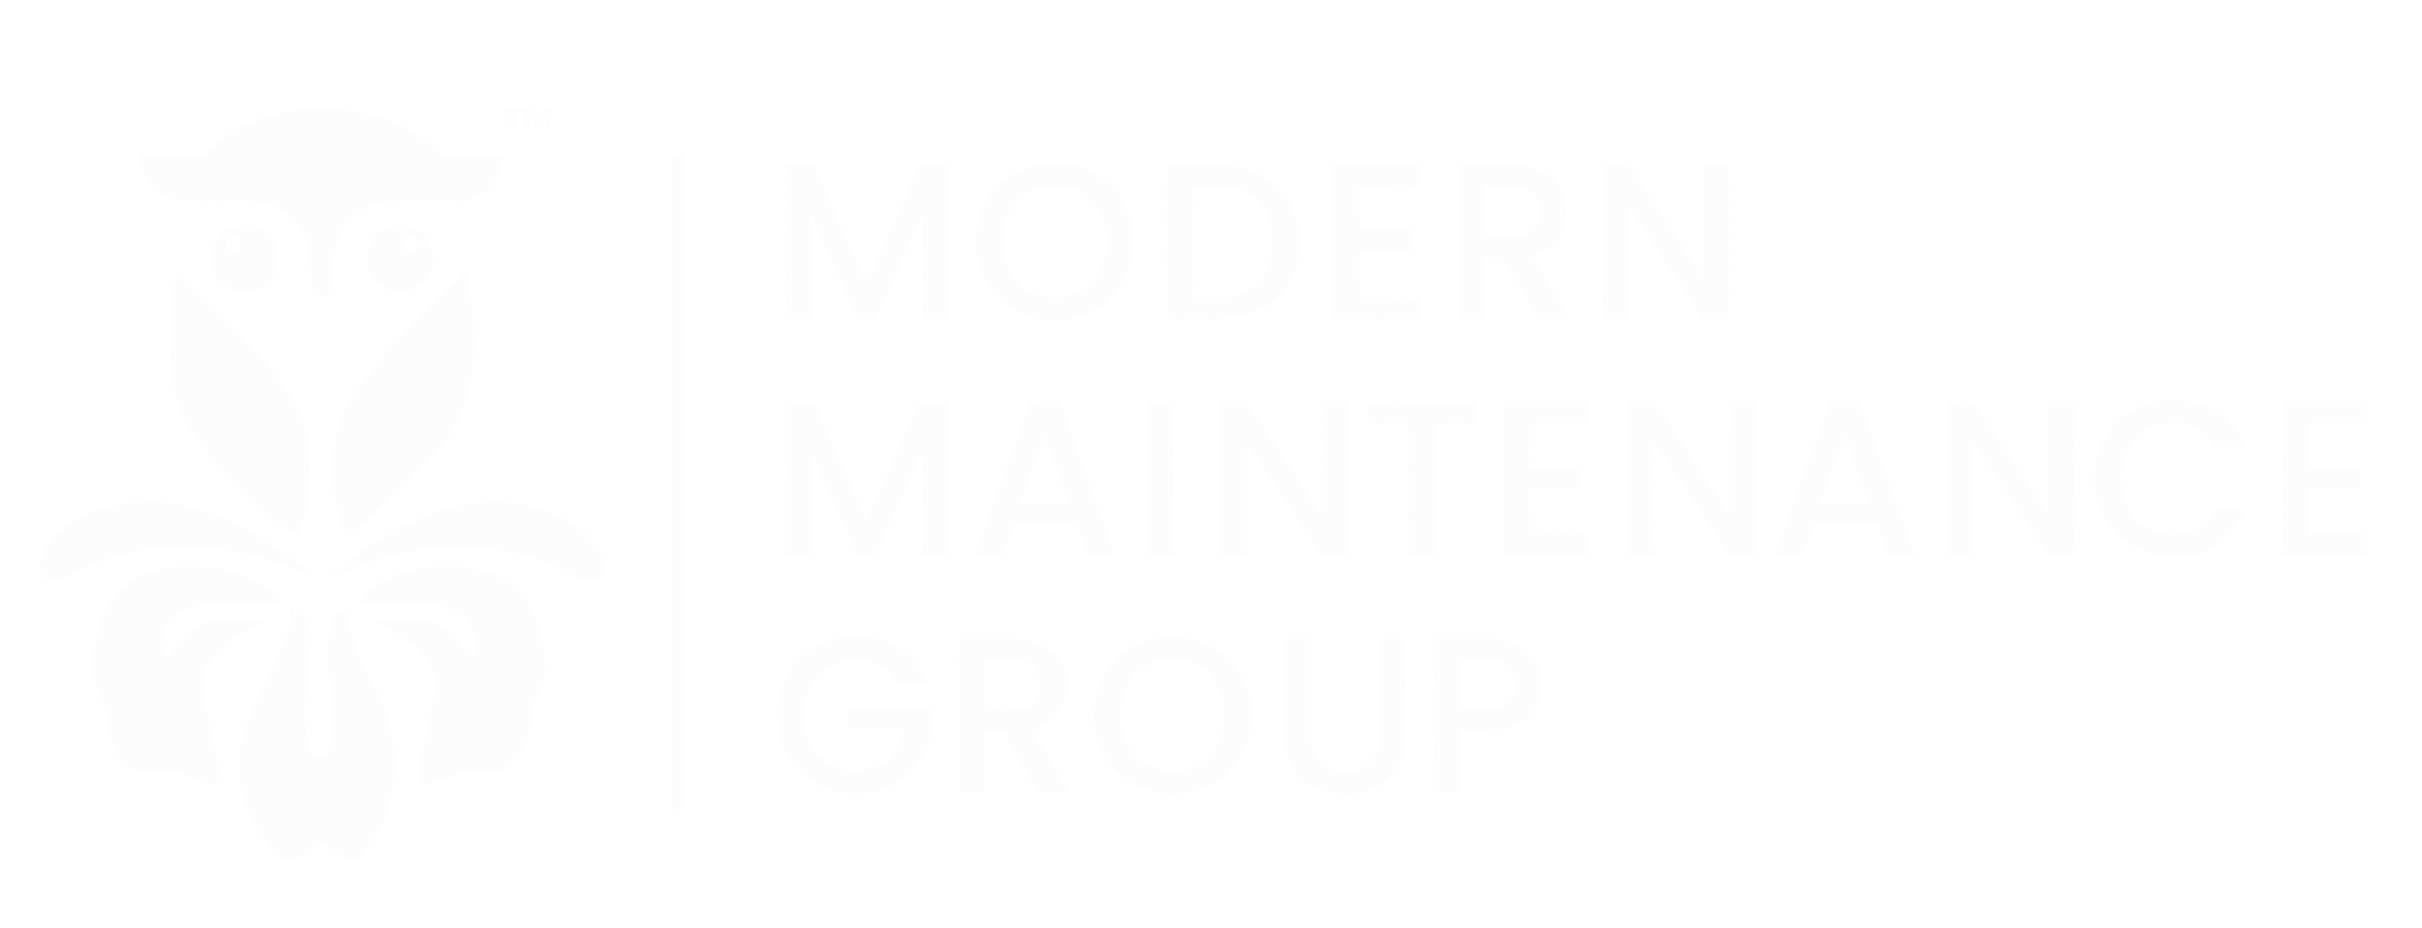 Modern Maintenance Group Logo - White